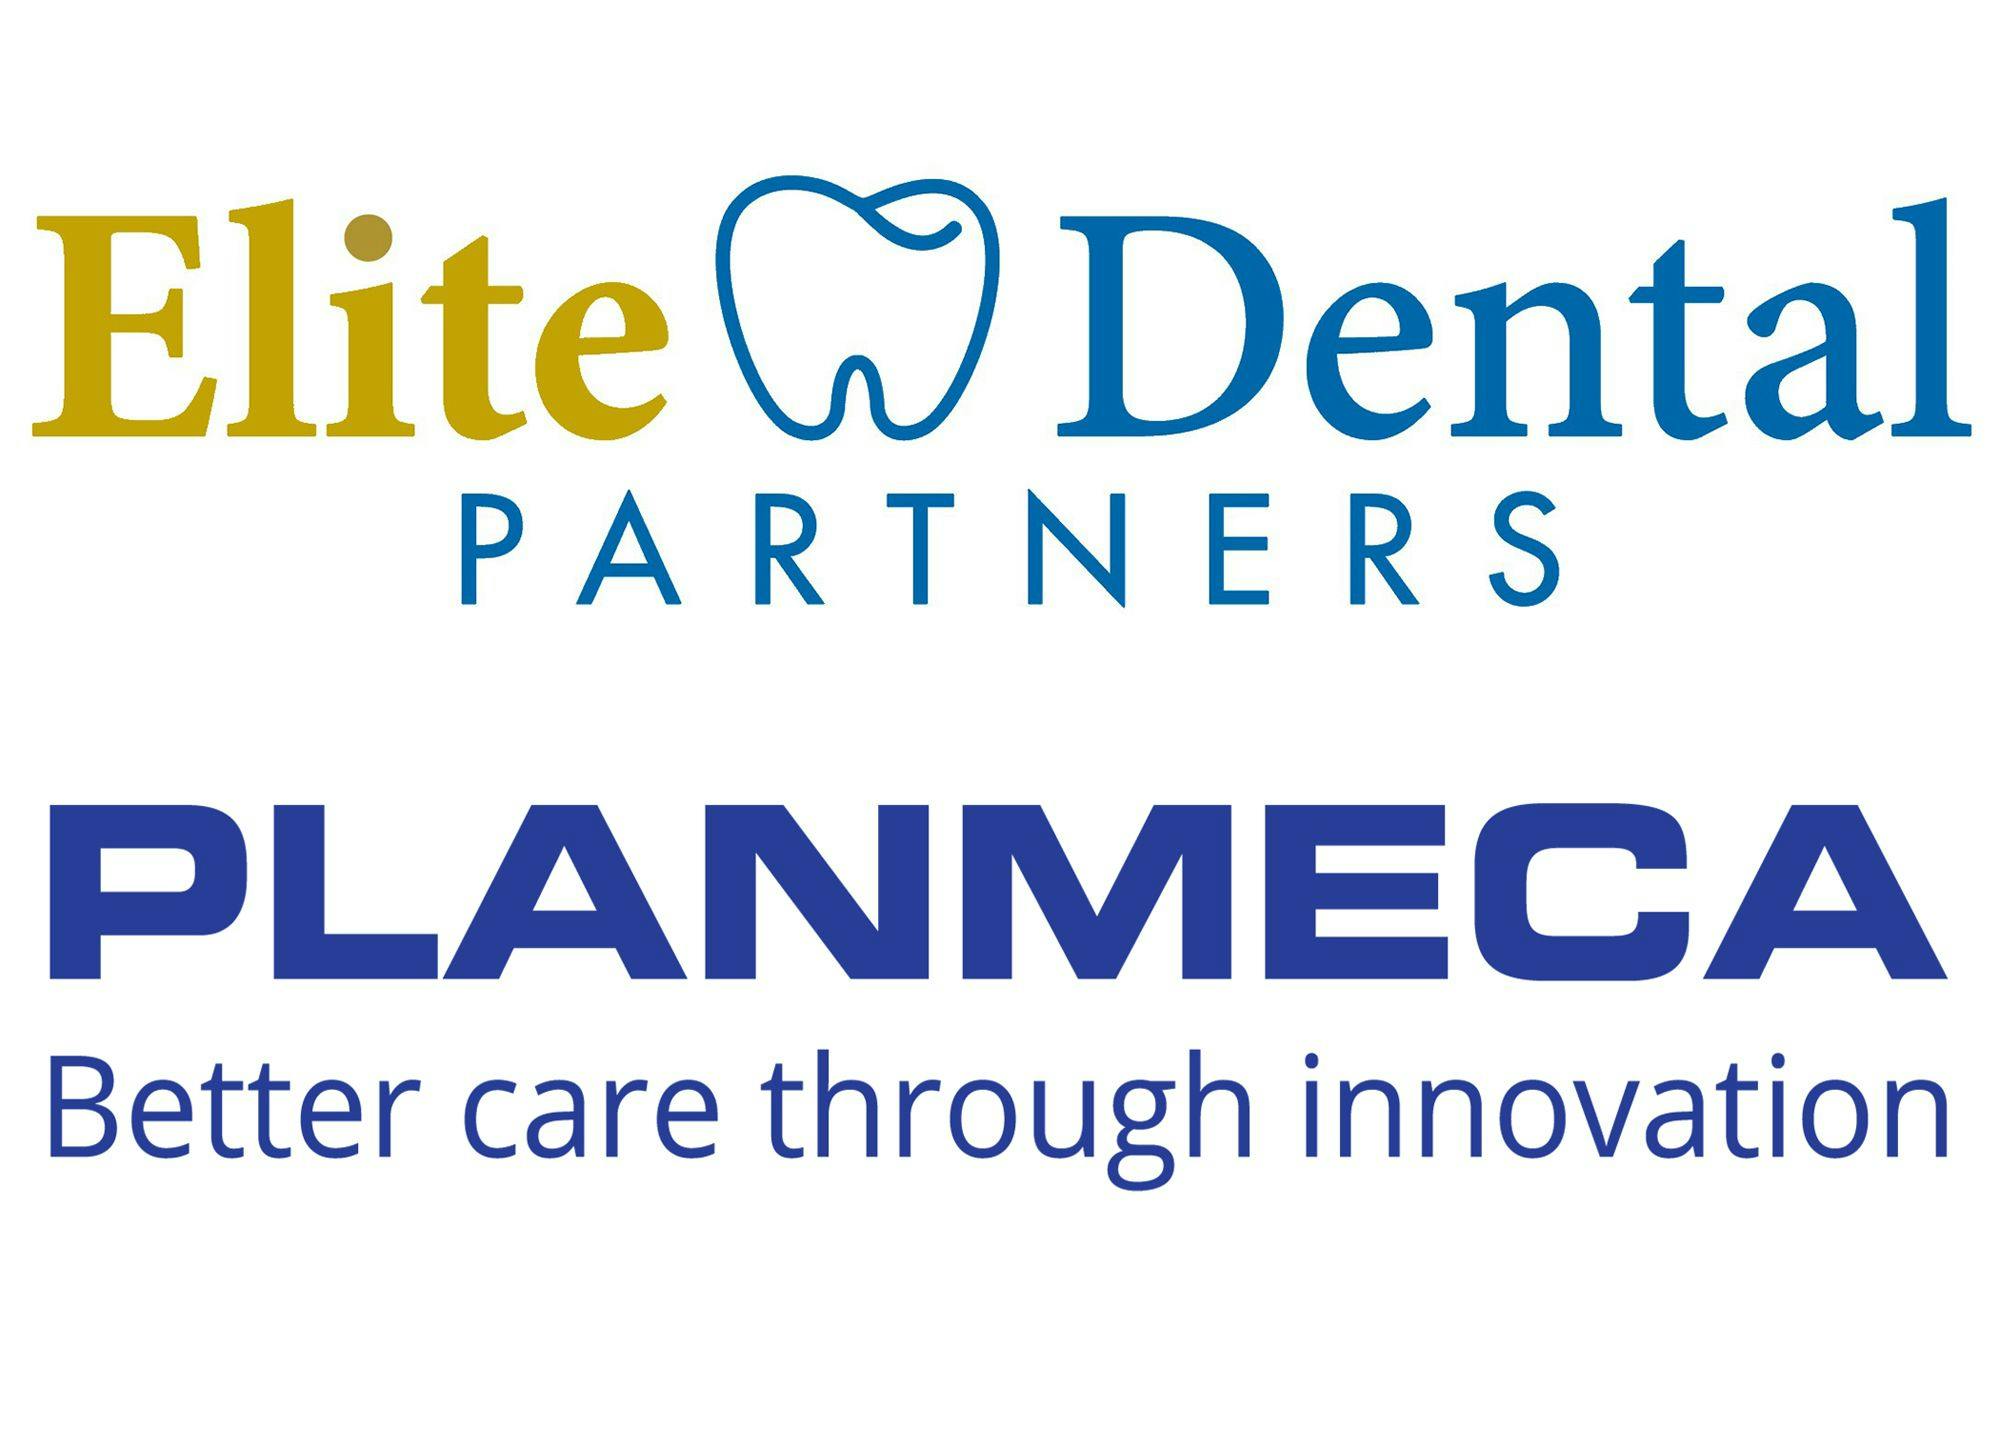 Planmeca Announces Partnership with Elite Dental Partners